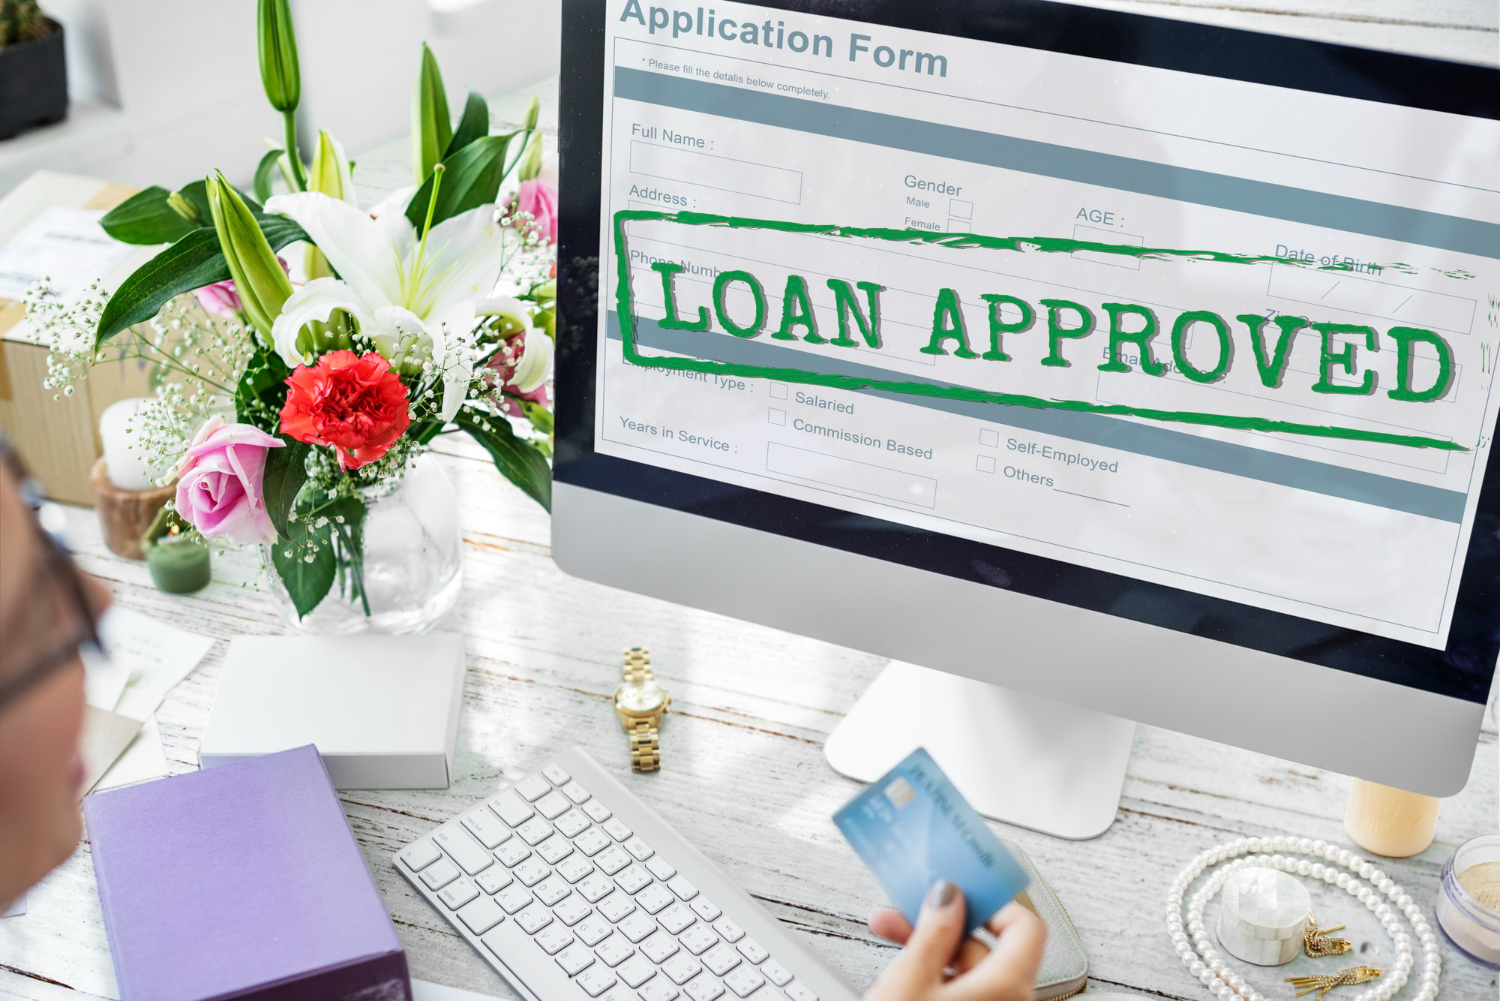 Can You Apply for SBA Loan Twice?